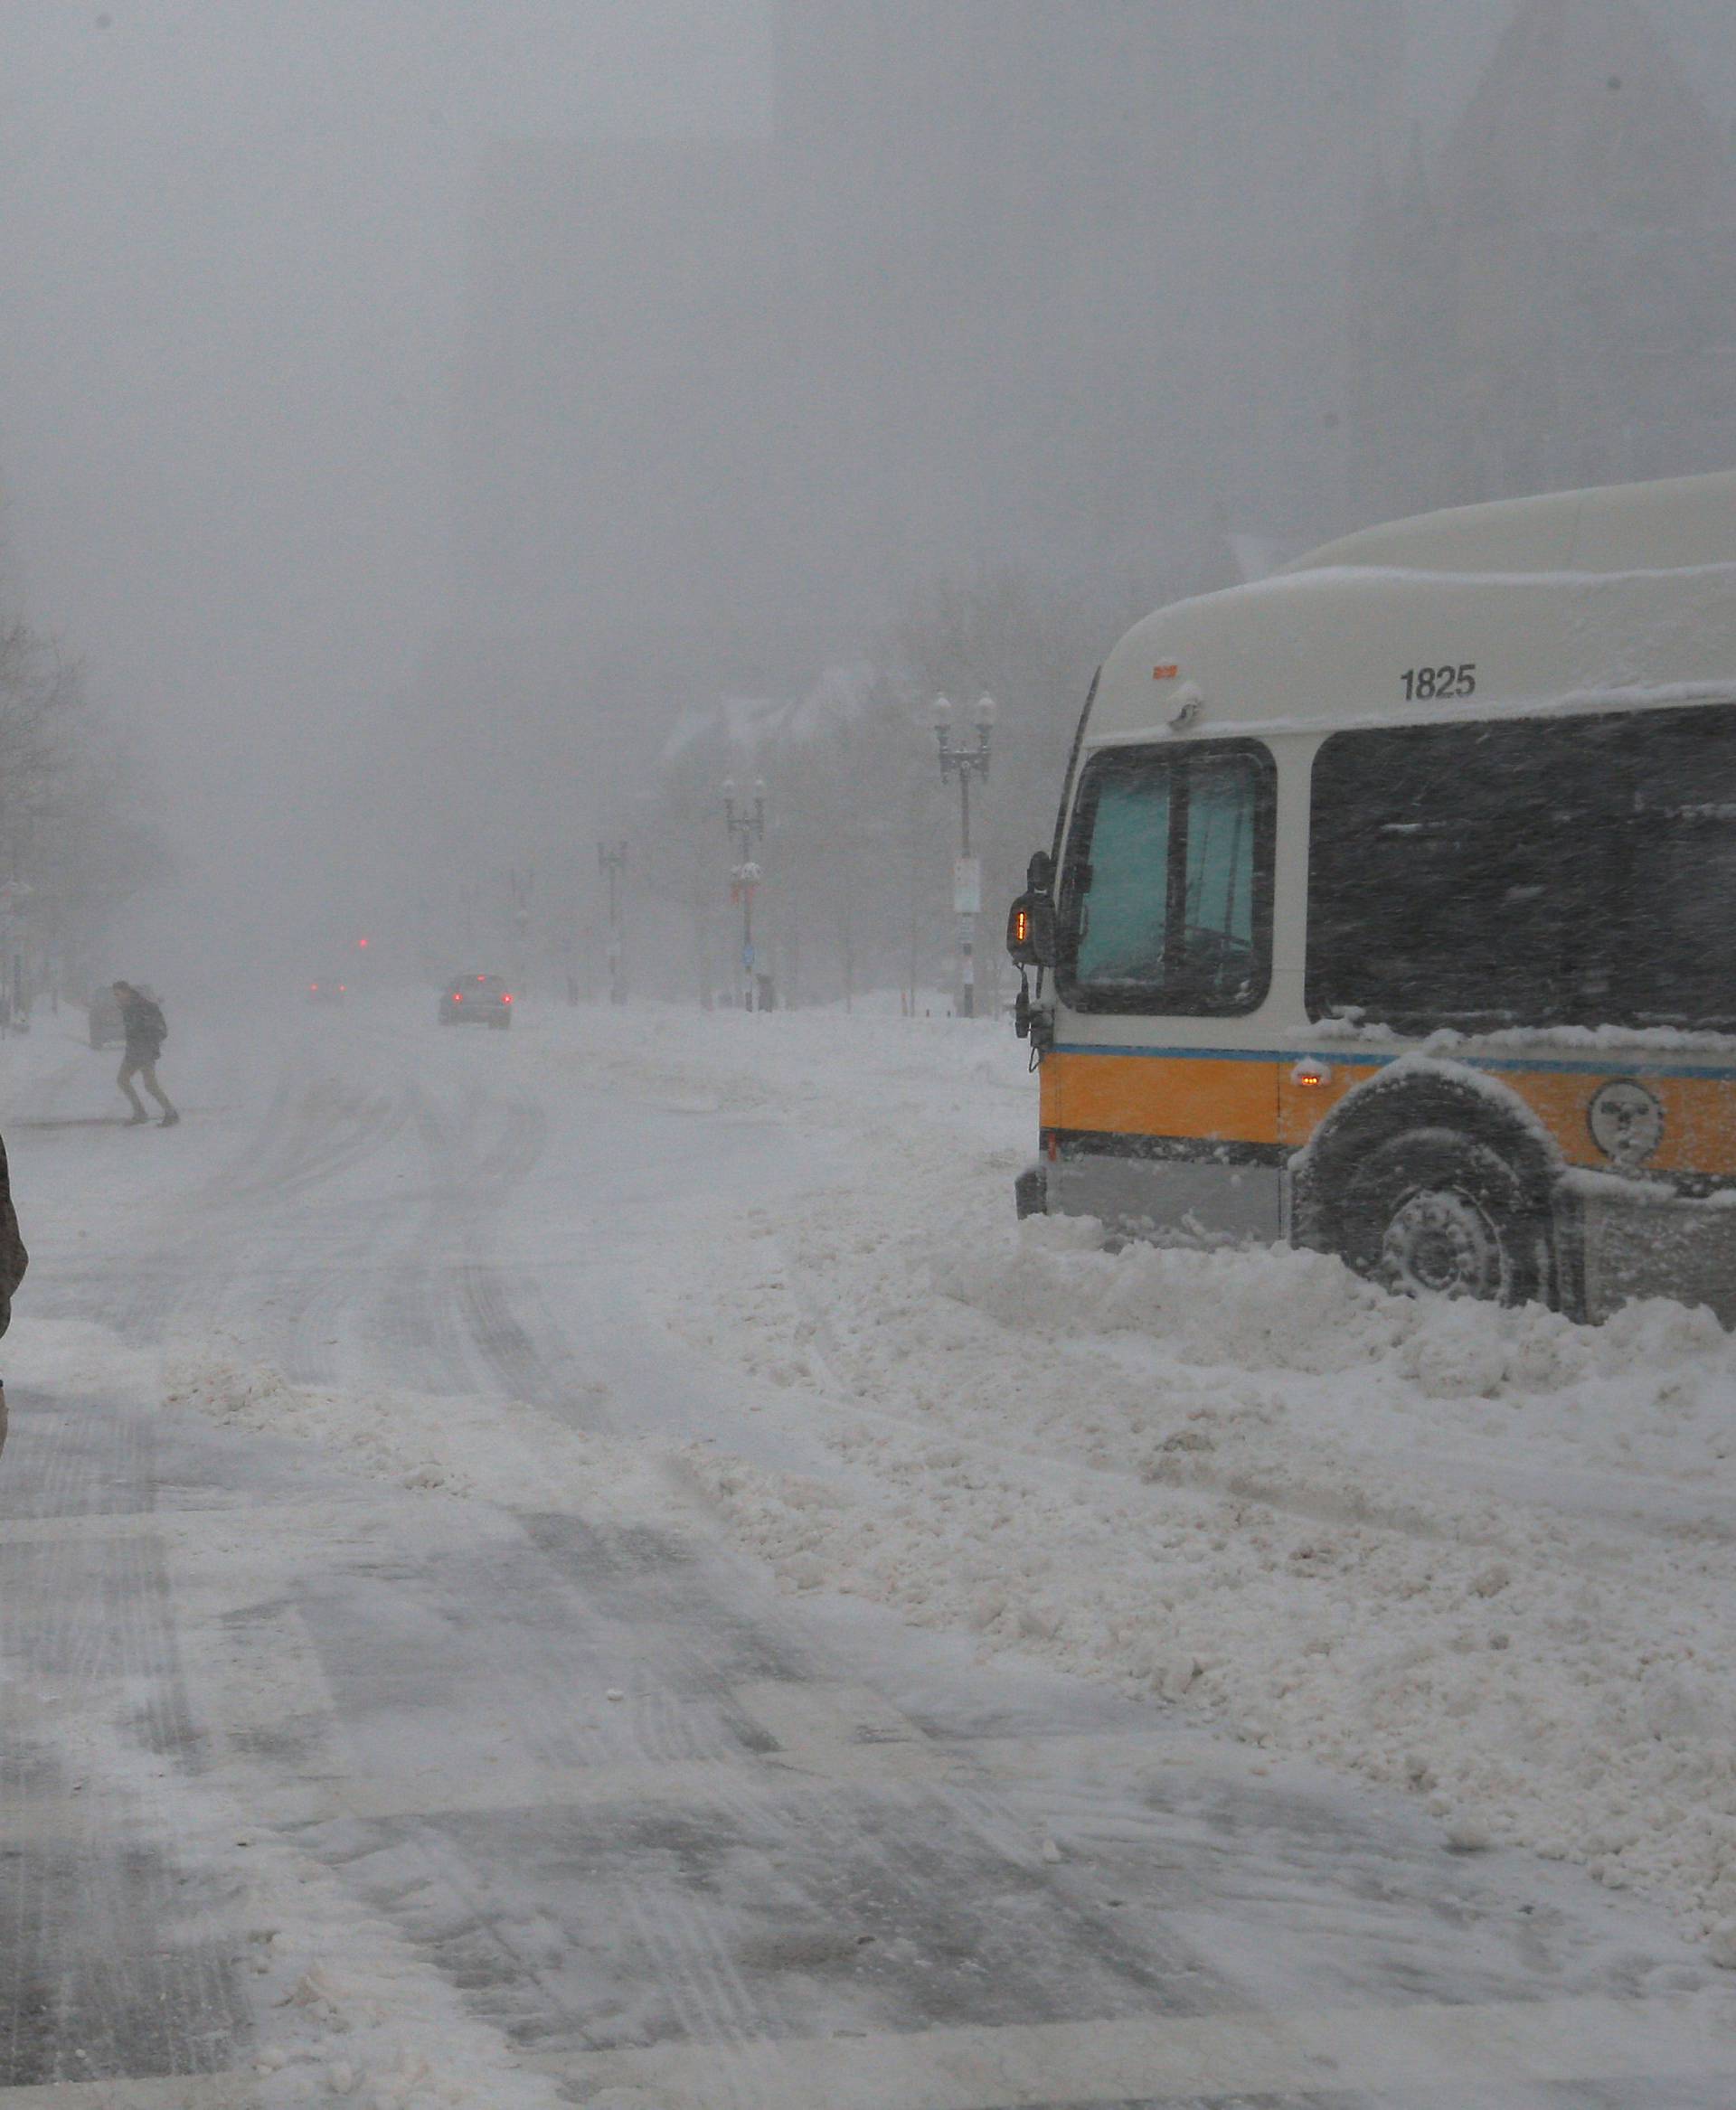 Pedestrians pass a disabled public MBTA bus during Storm Grayson in Boston